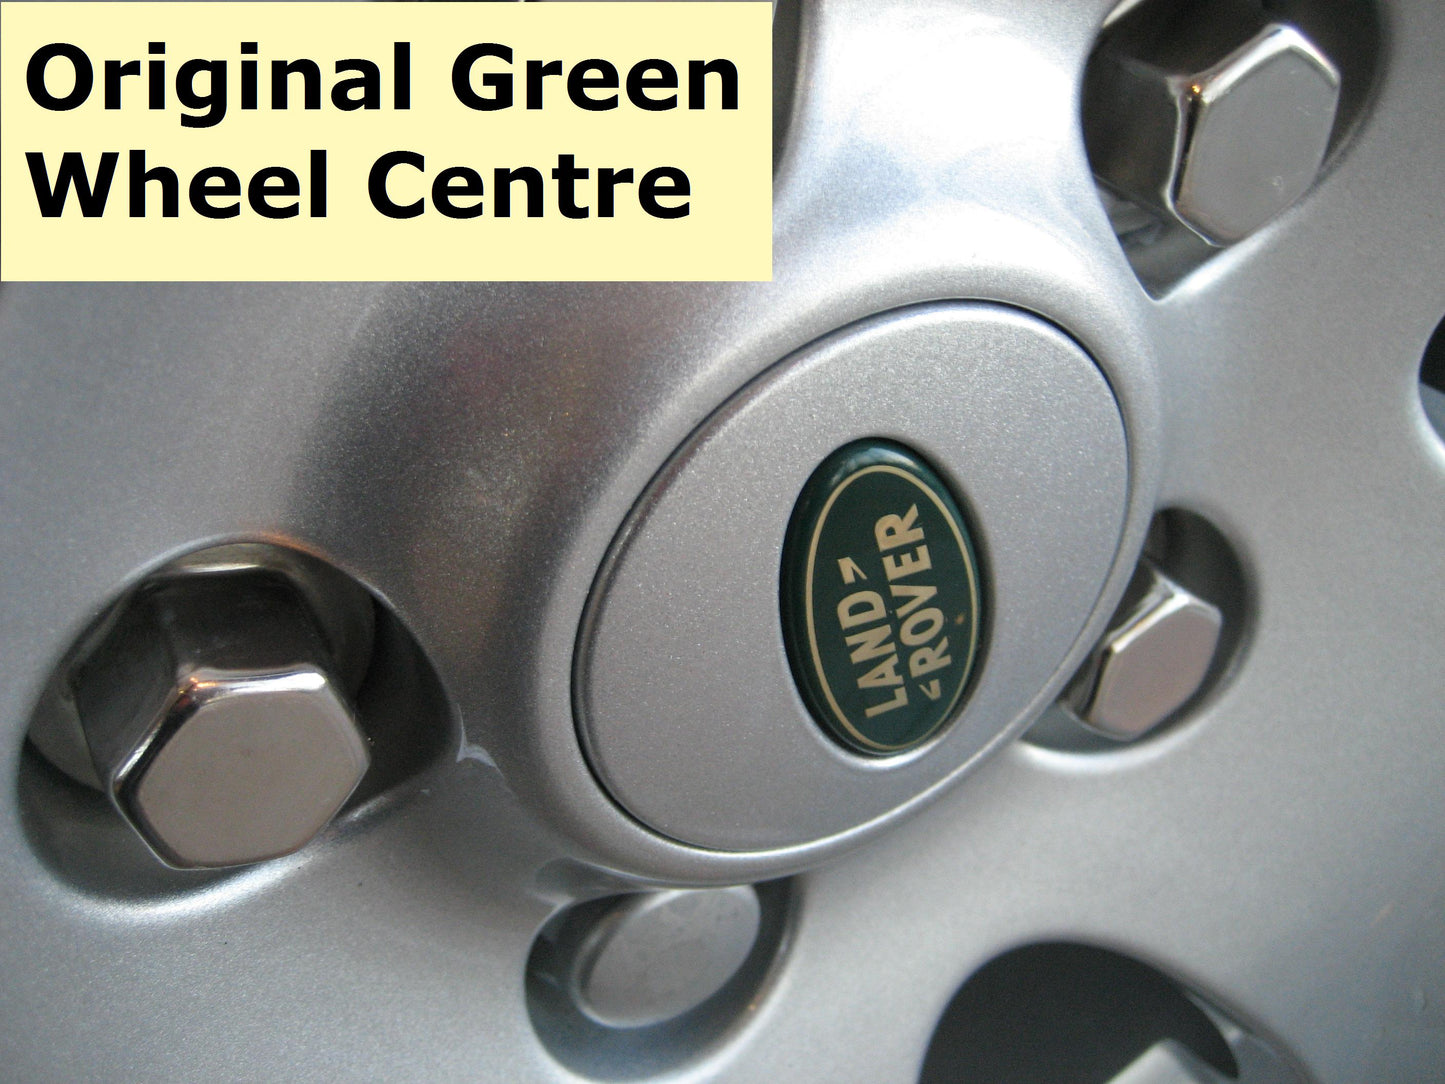 Silver & Chrome Wheel Center caps for Range Rover Sport 2010-13 Genuine 4pc set